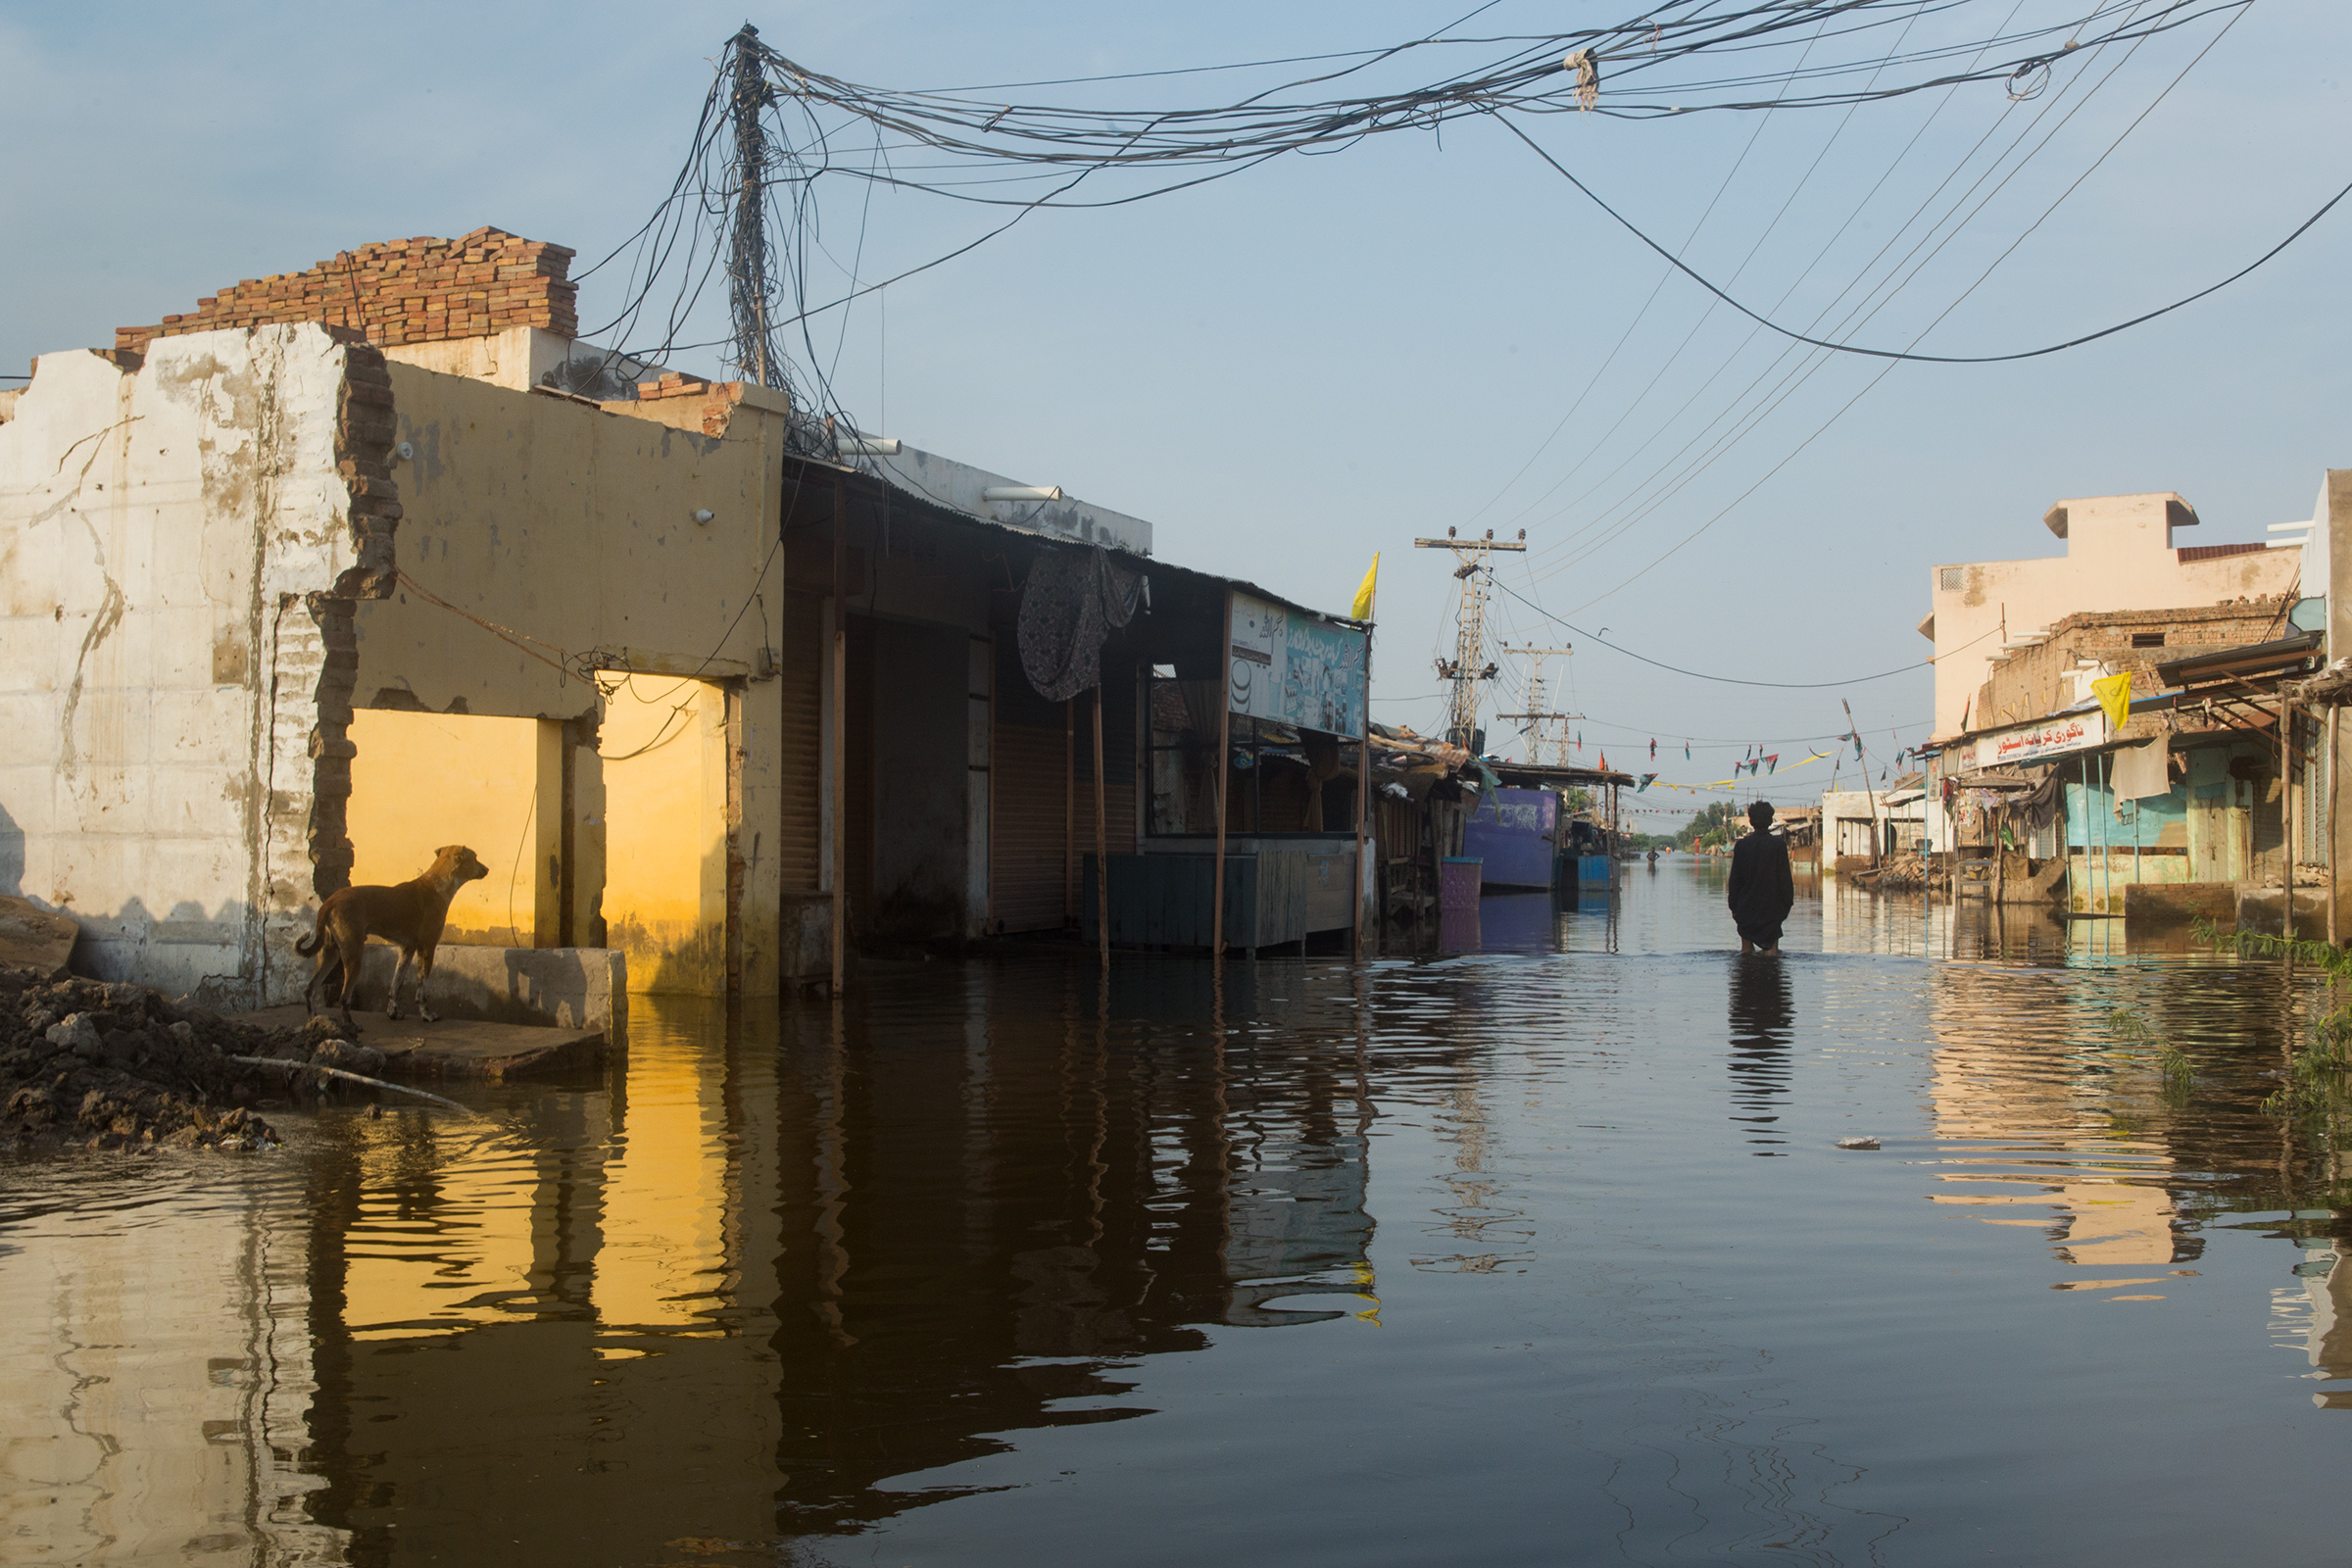 A flooded bazaar in Hayat Khaskheli, Jhuddo. (Hassaan Gondal for TIME)